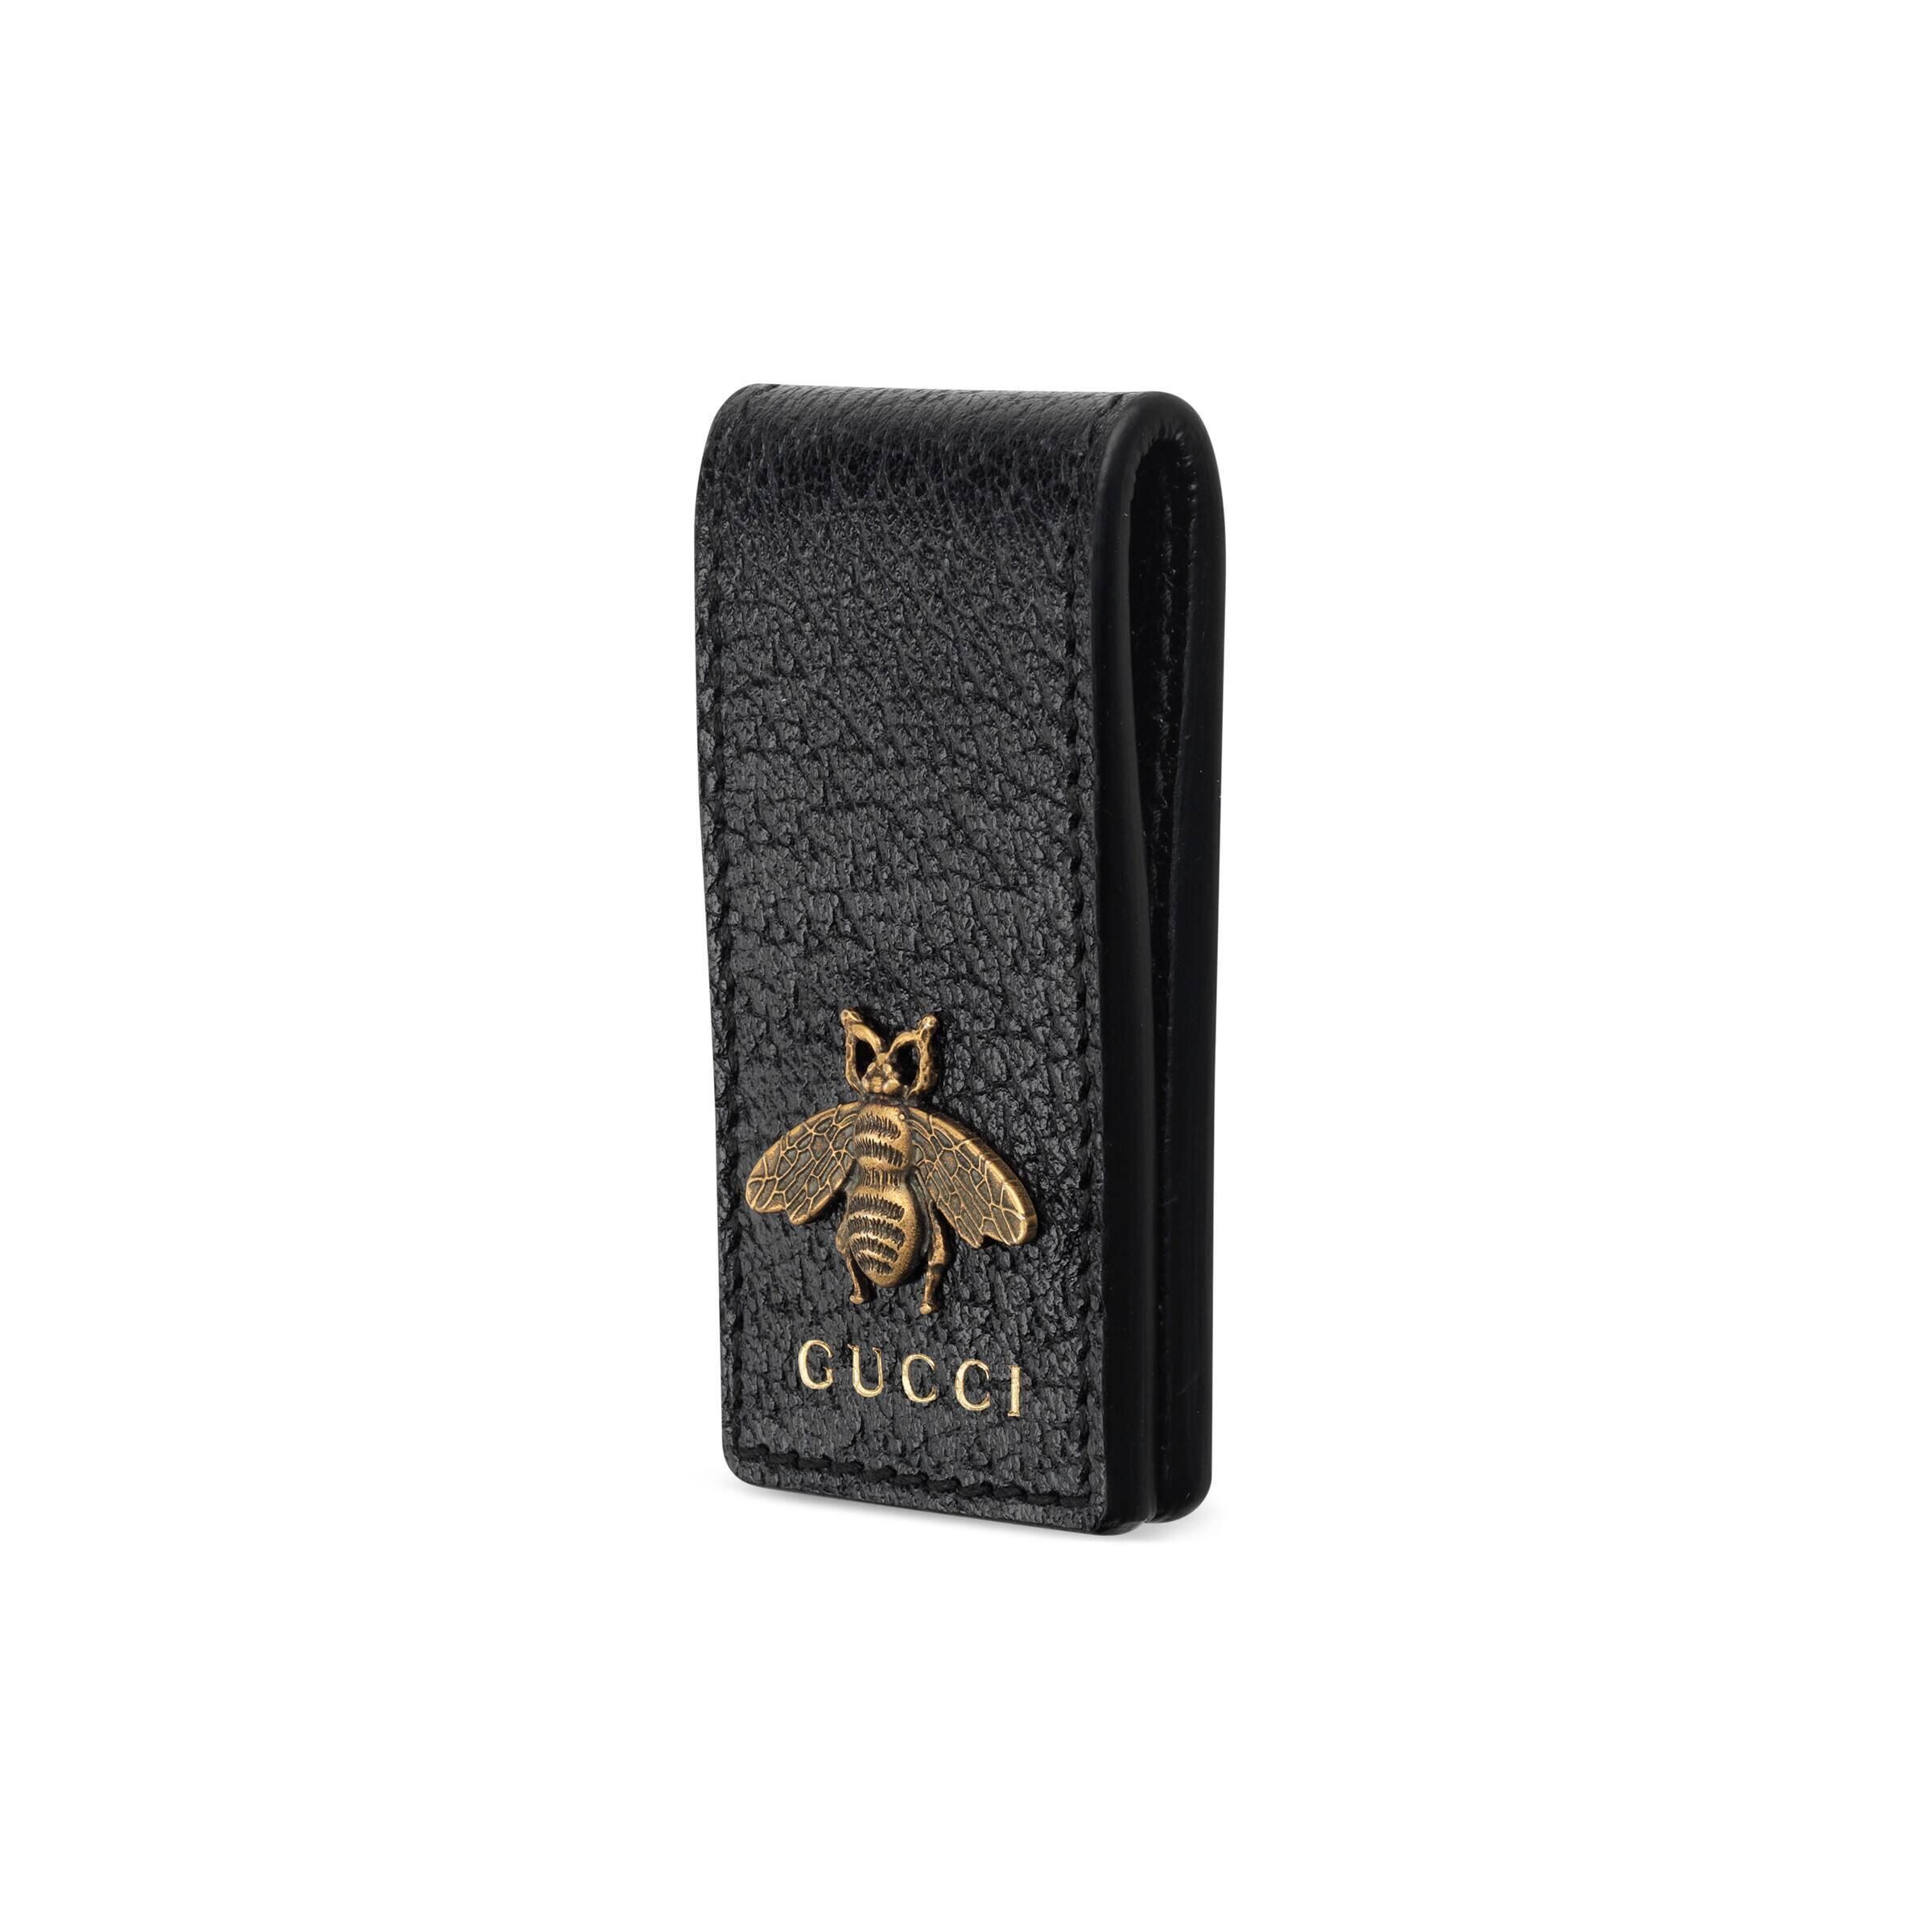 Gucci Men's Animalier Bee Textured Black Leather Bifold Wallet